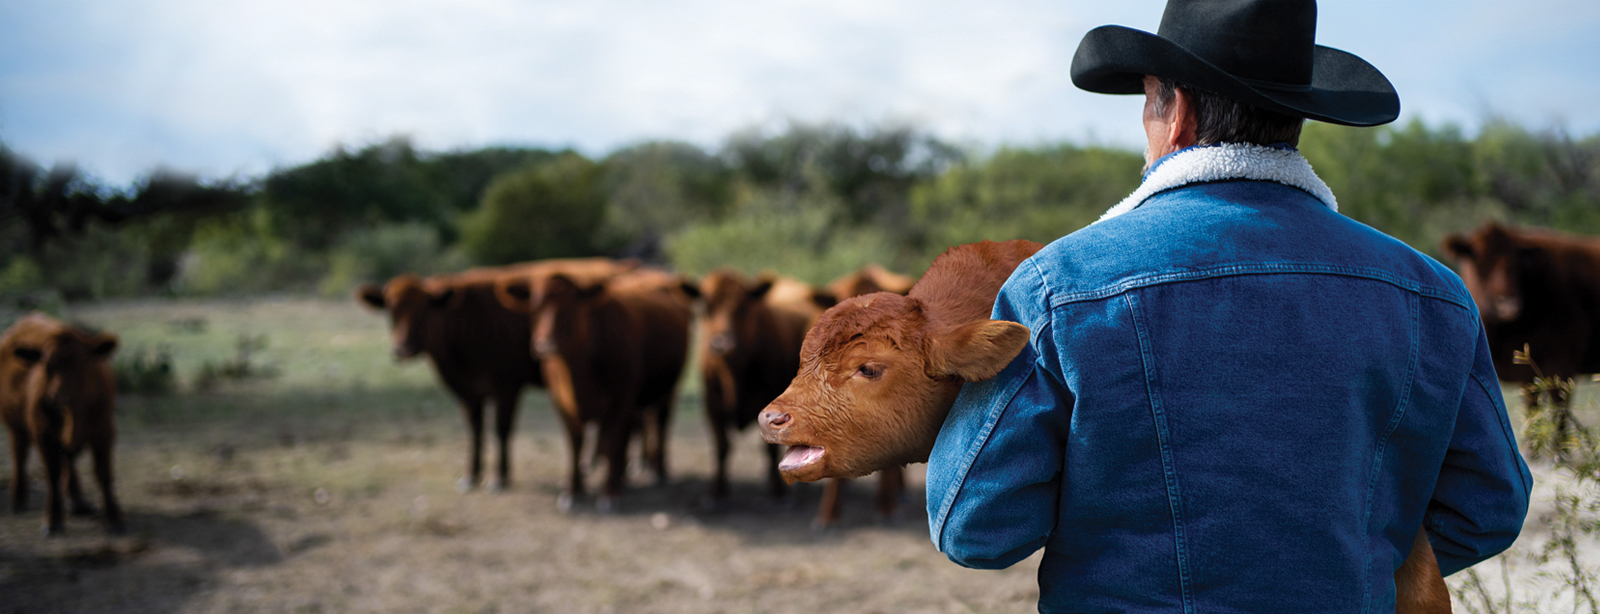 Cowboy holding calf